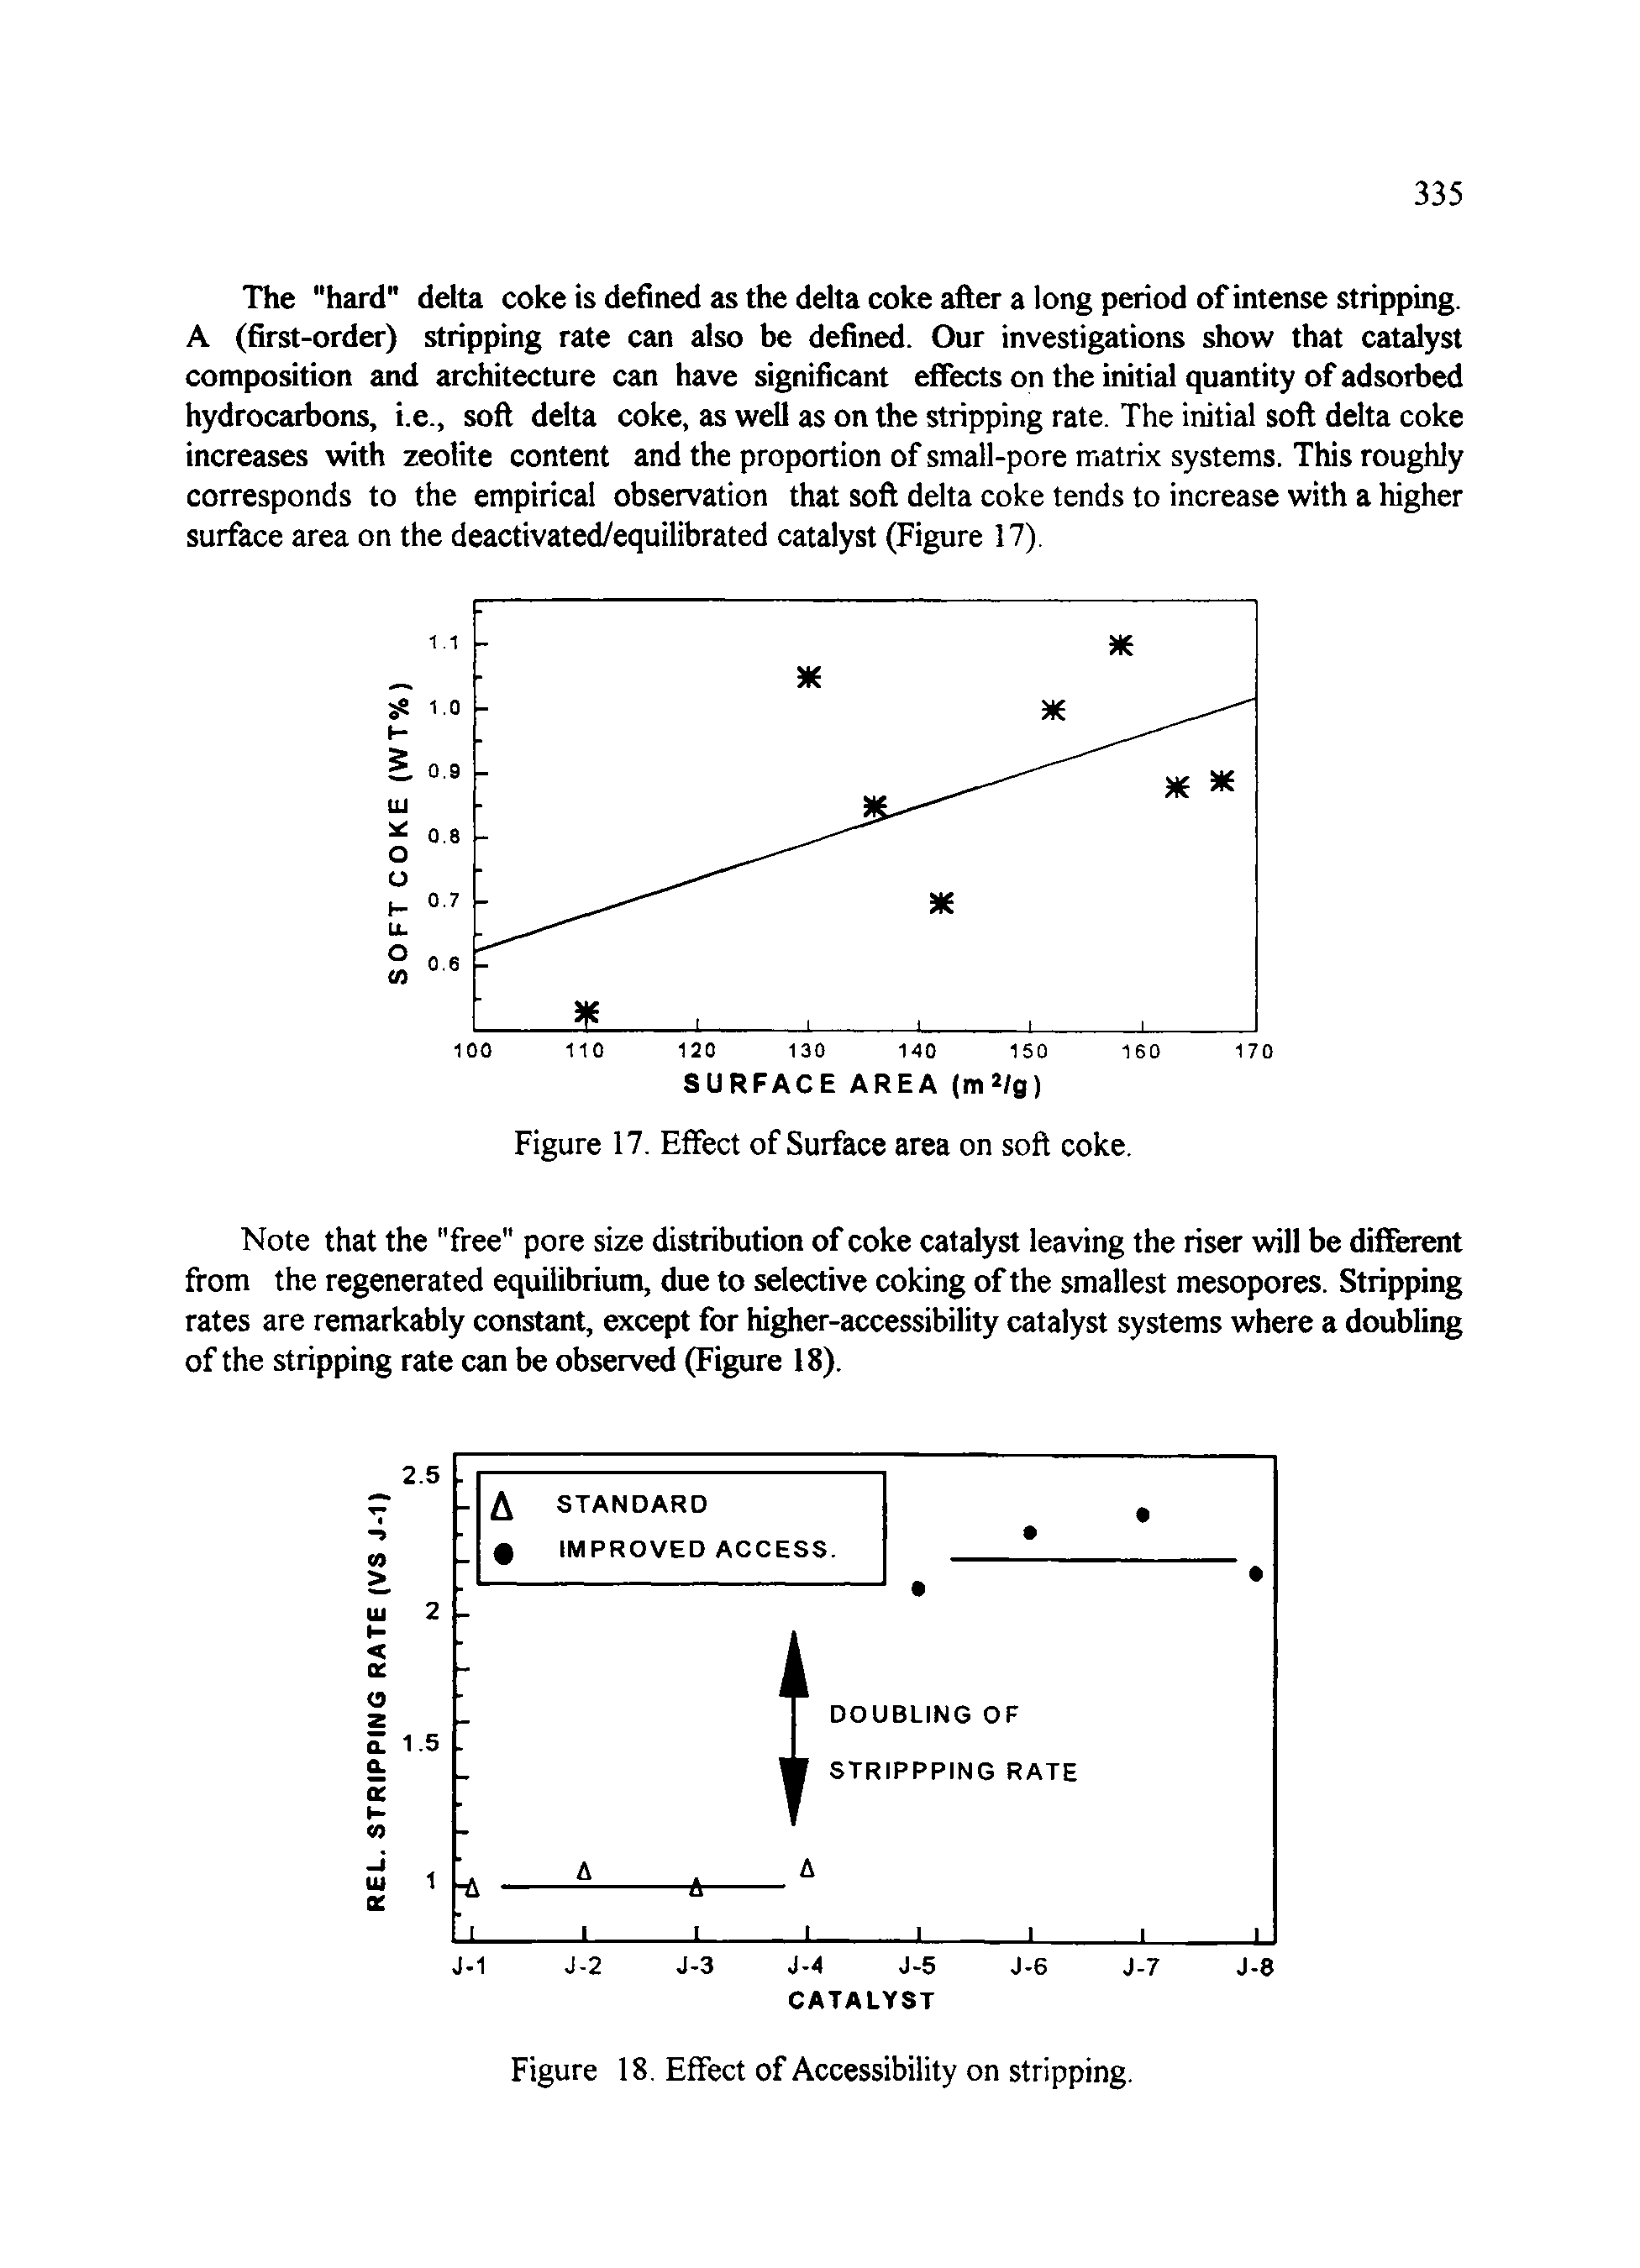 Figure 17. Effect of Surface area on soft coke.